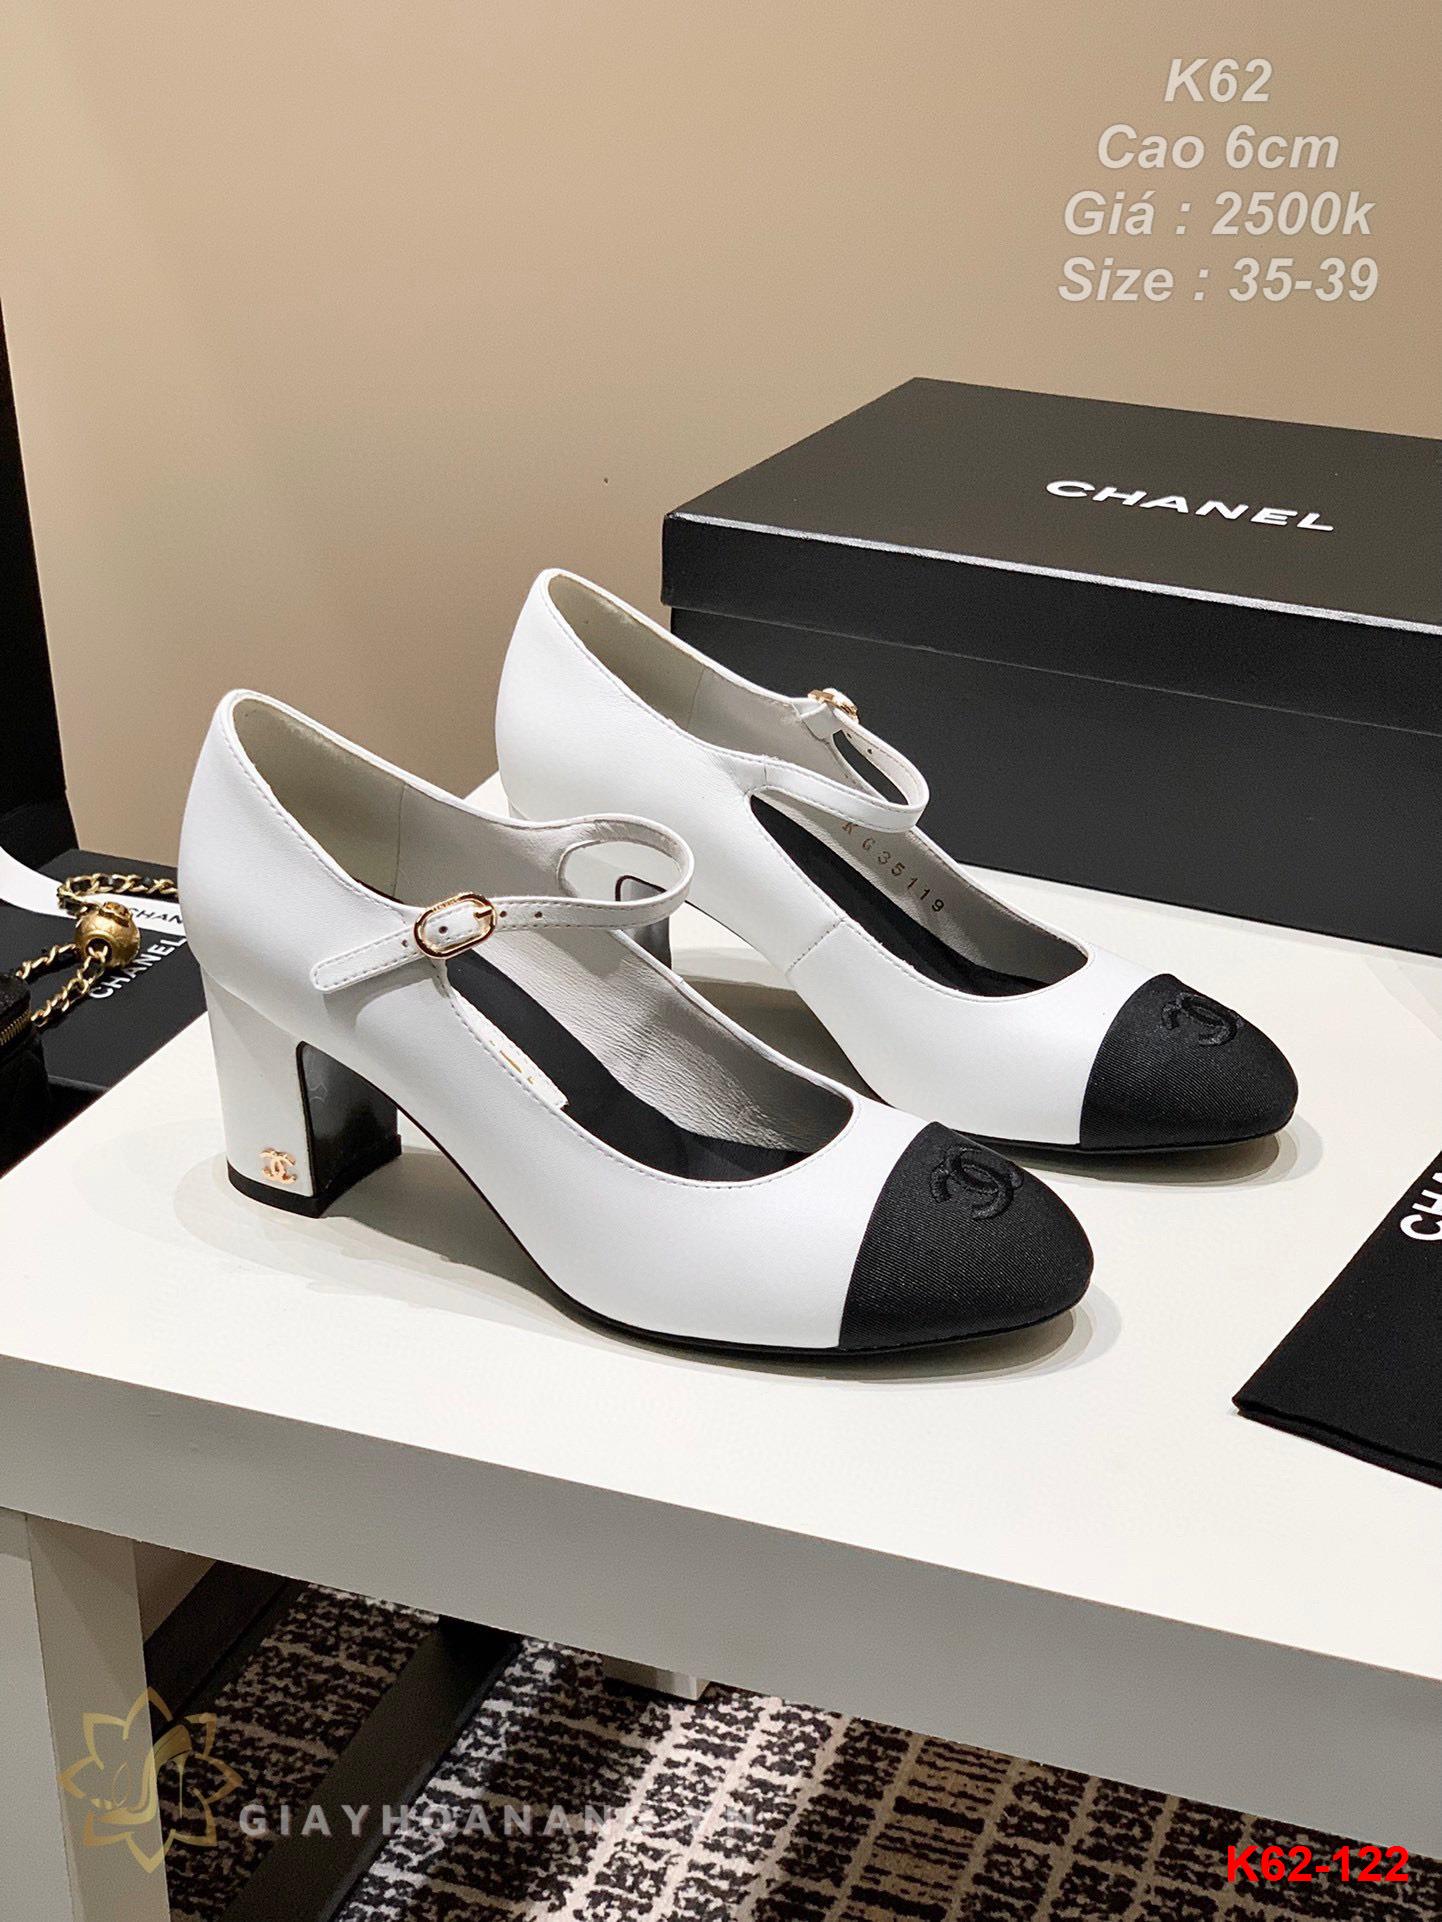 K62-122 Chanel giày cao gót 6cm siêu cấp